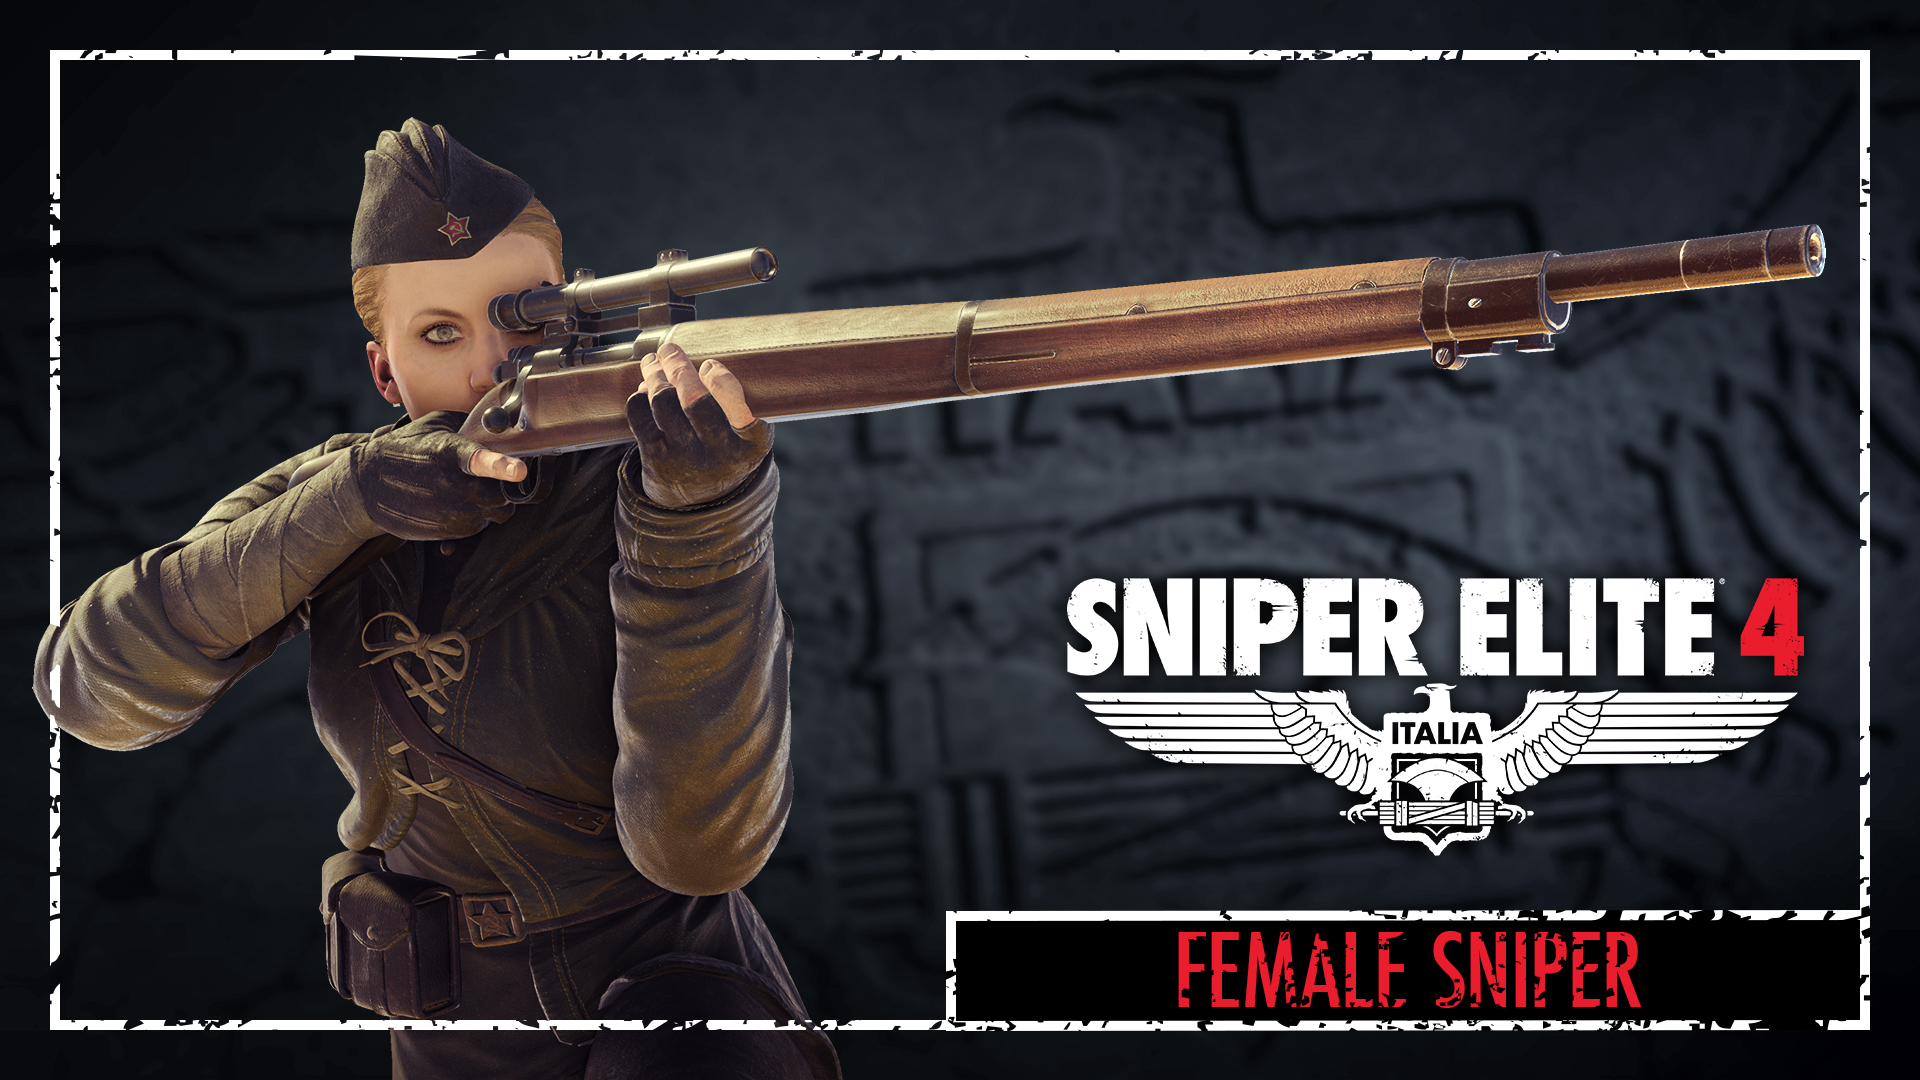 Sniper Elite 4 - Covert Heroes Character Pack Featured Screenshot #1